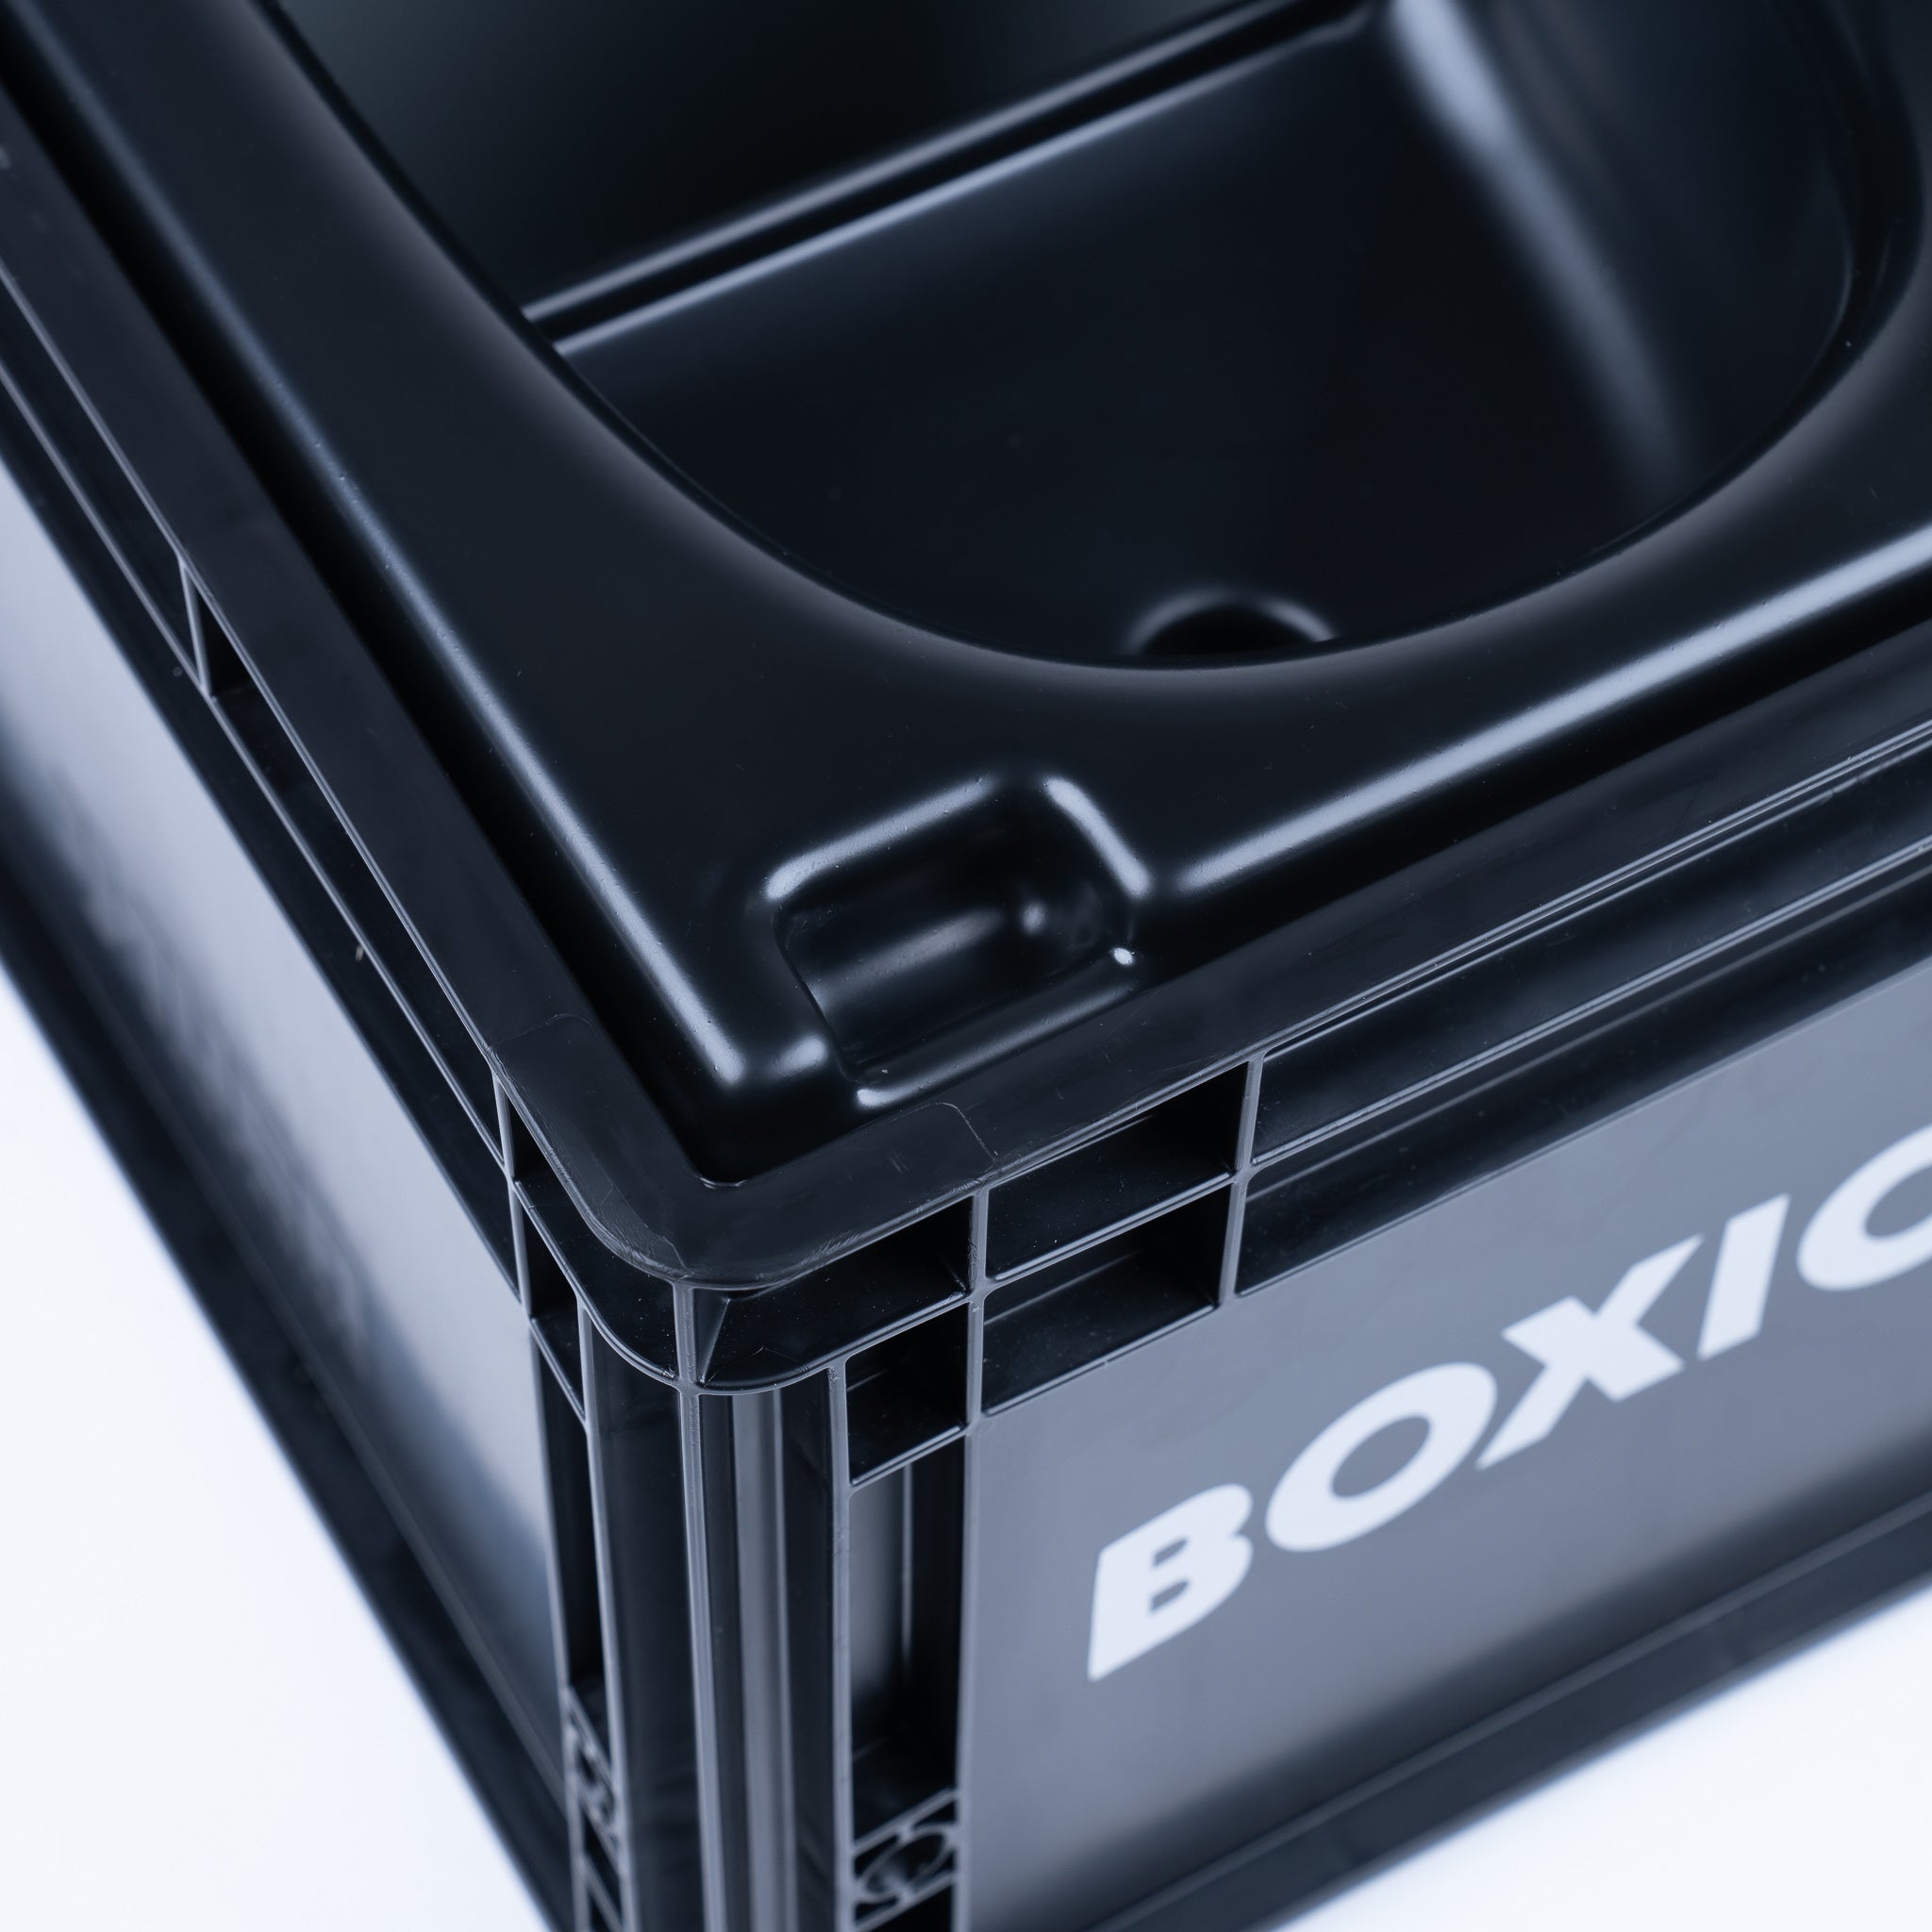 ➡️ Test: BOXIO Separating Toilet For Camping, Van Life & Crises